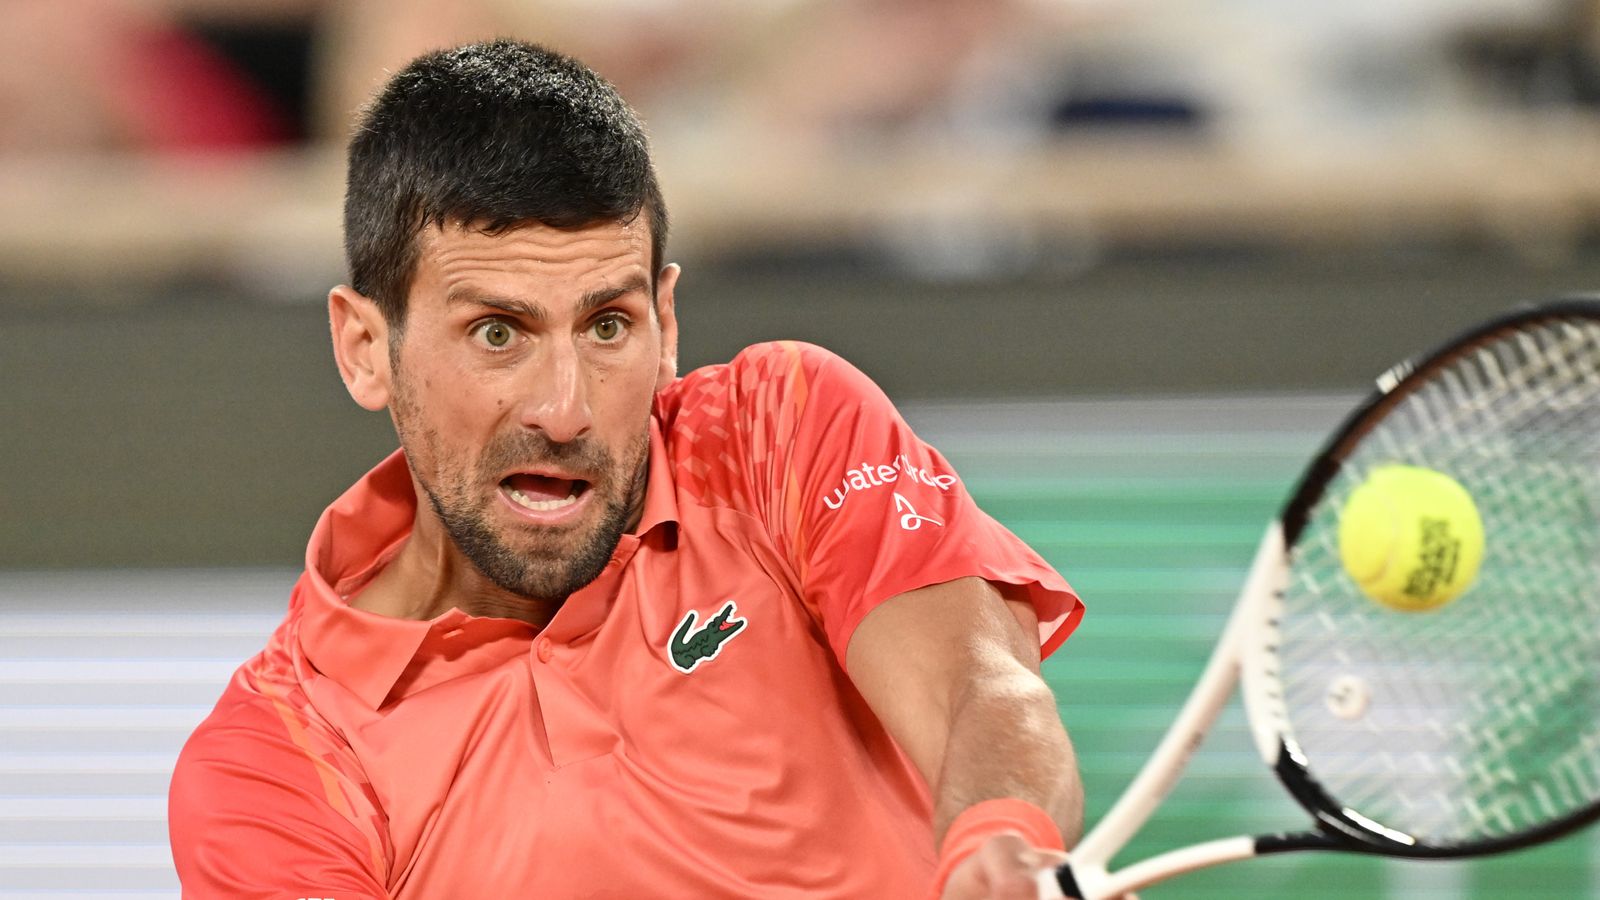 French Open Novak Djokovic beats battling Marton Fucsovics to reach